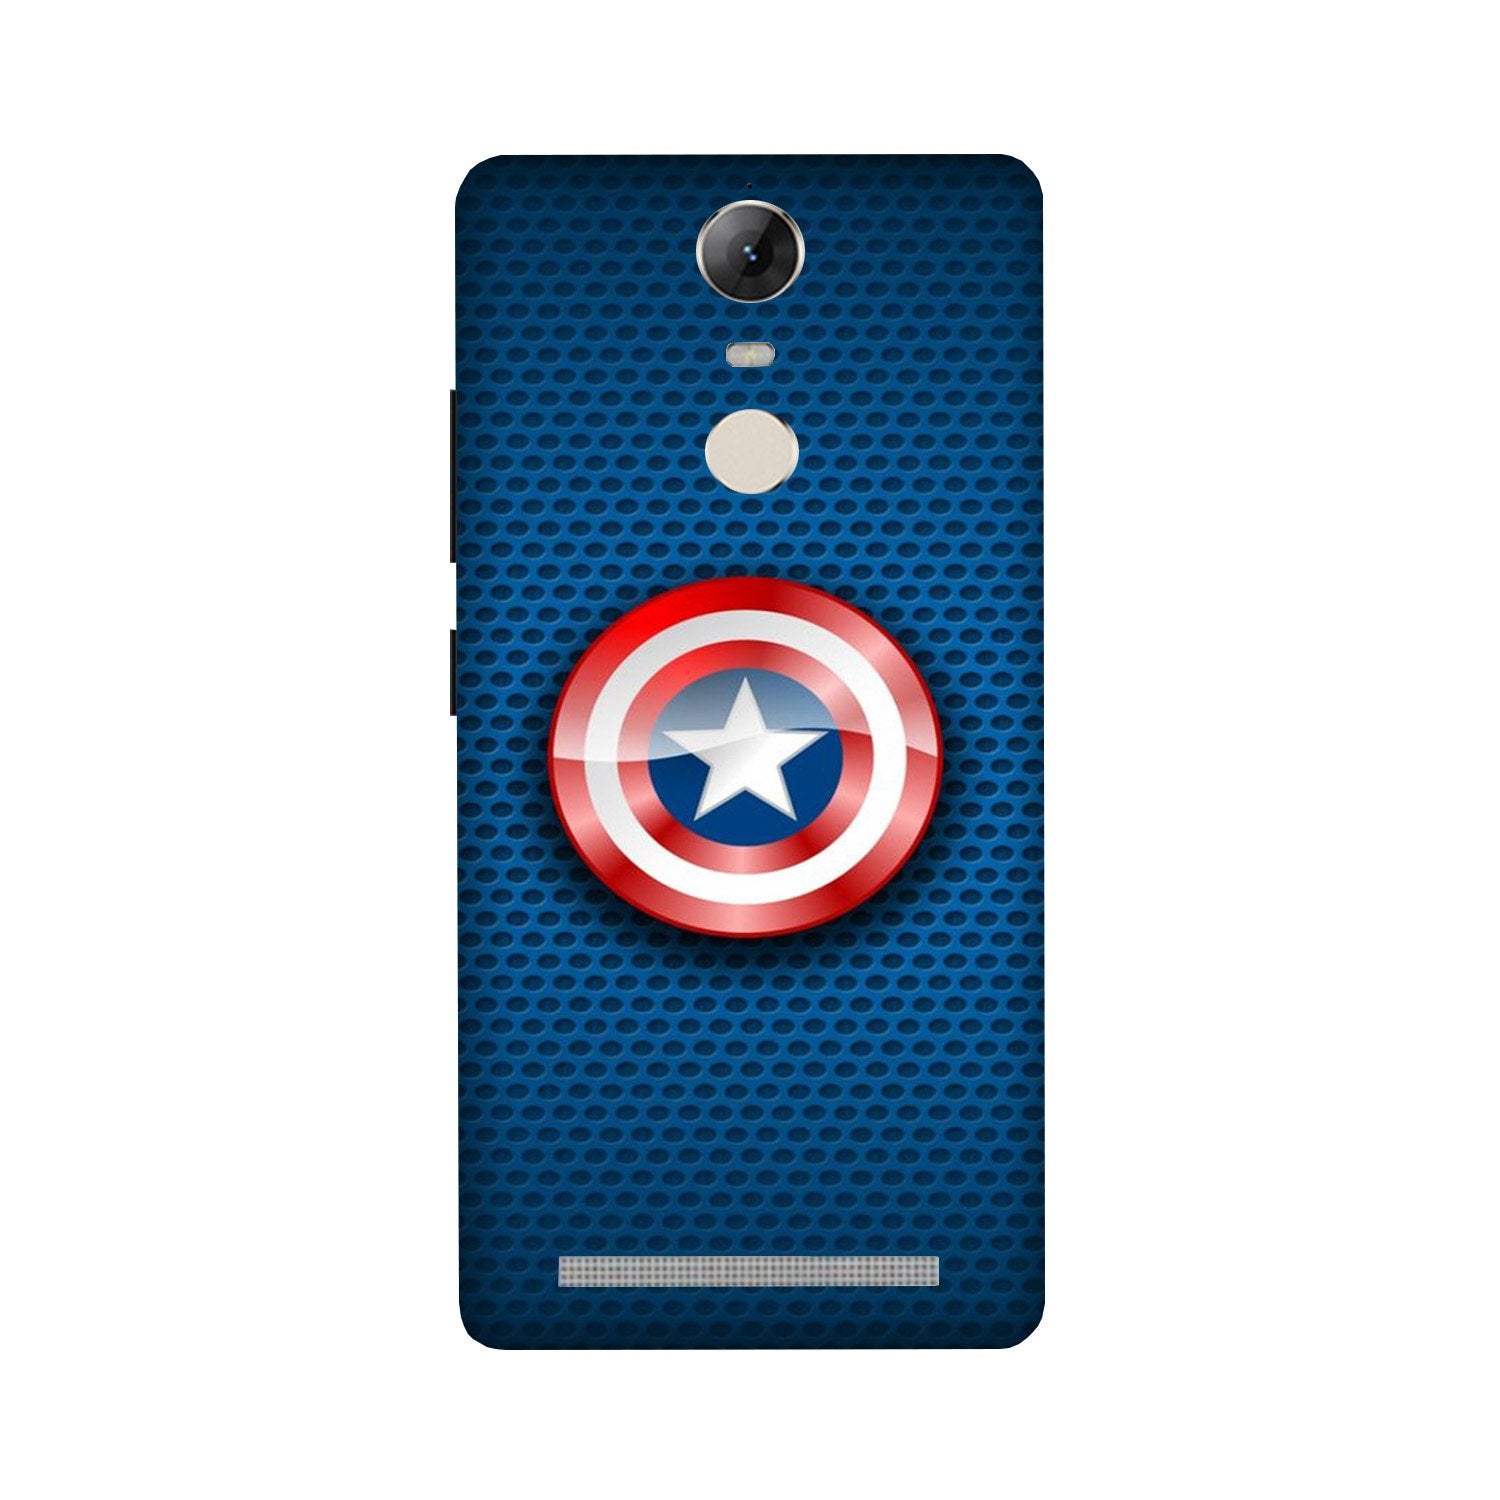 Captain America Shield Case for Lenovo Vibe K5 Note (Design No. 253)